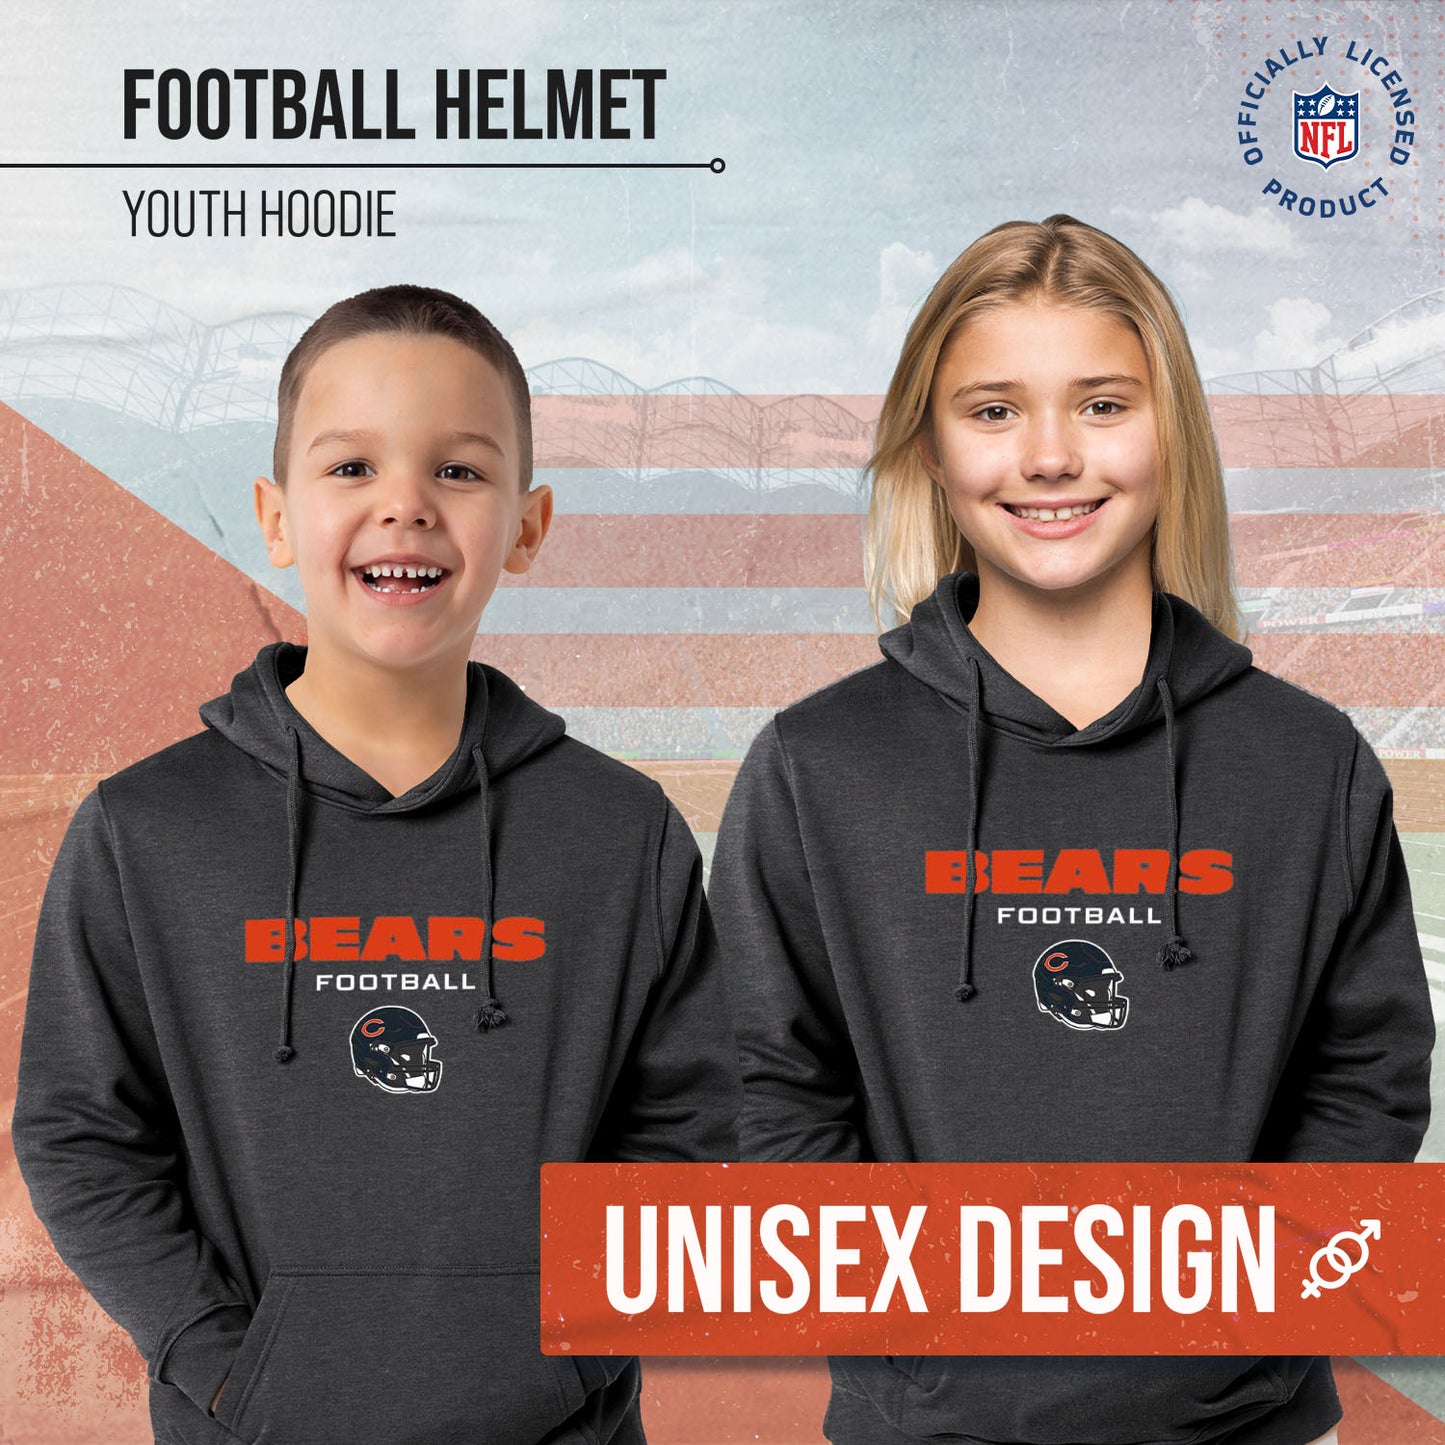 Chicago Bears NFL Youth Football Helmet Hood - Charcoal